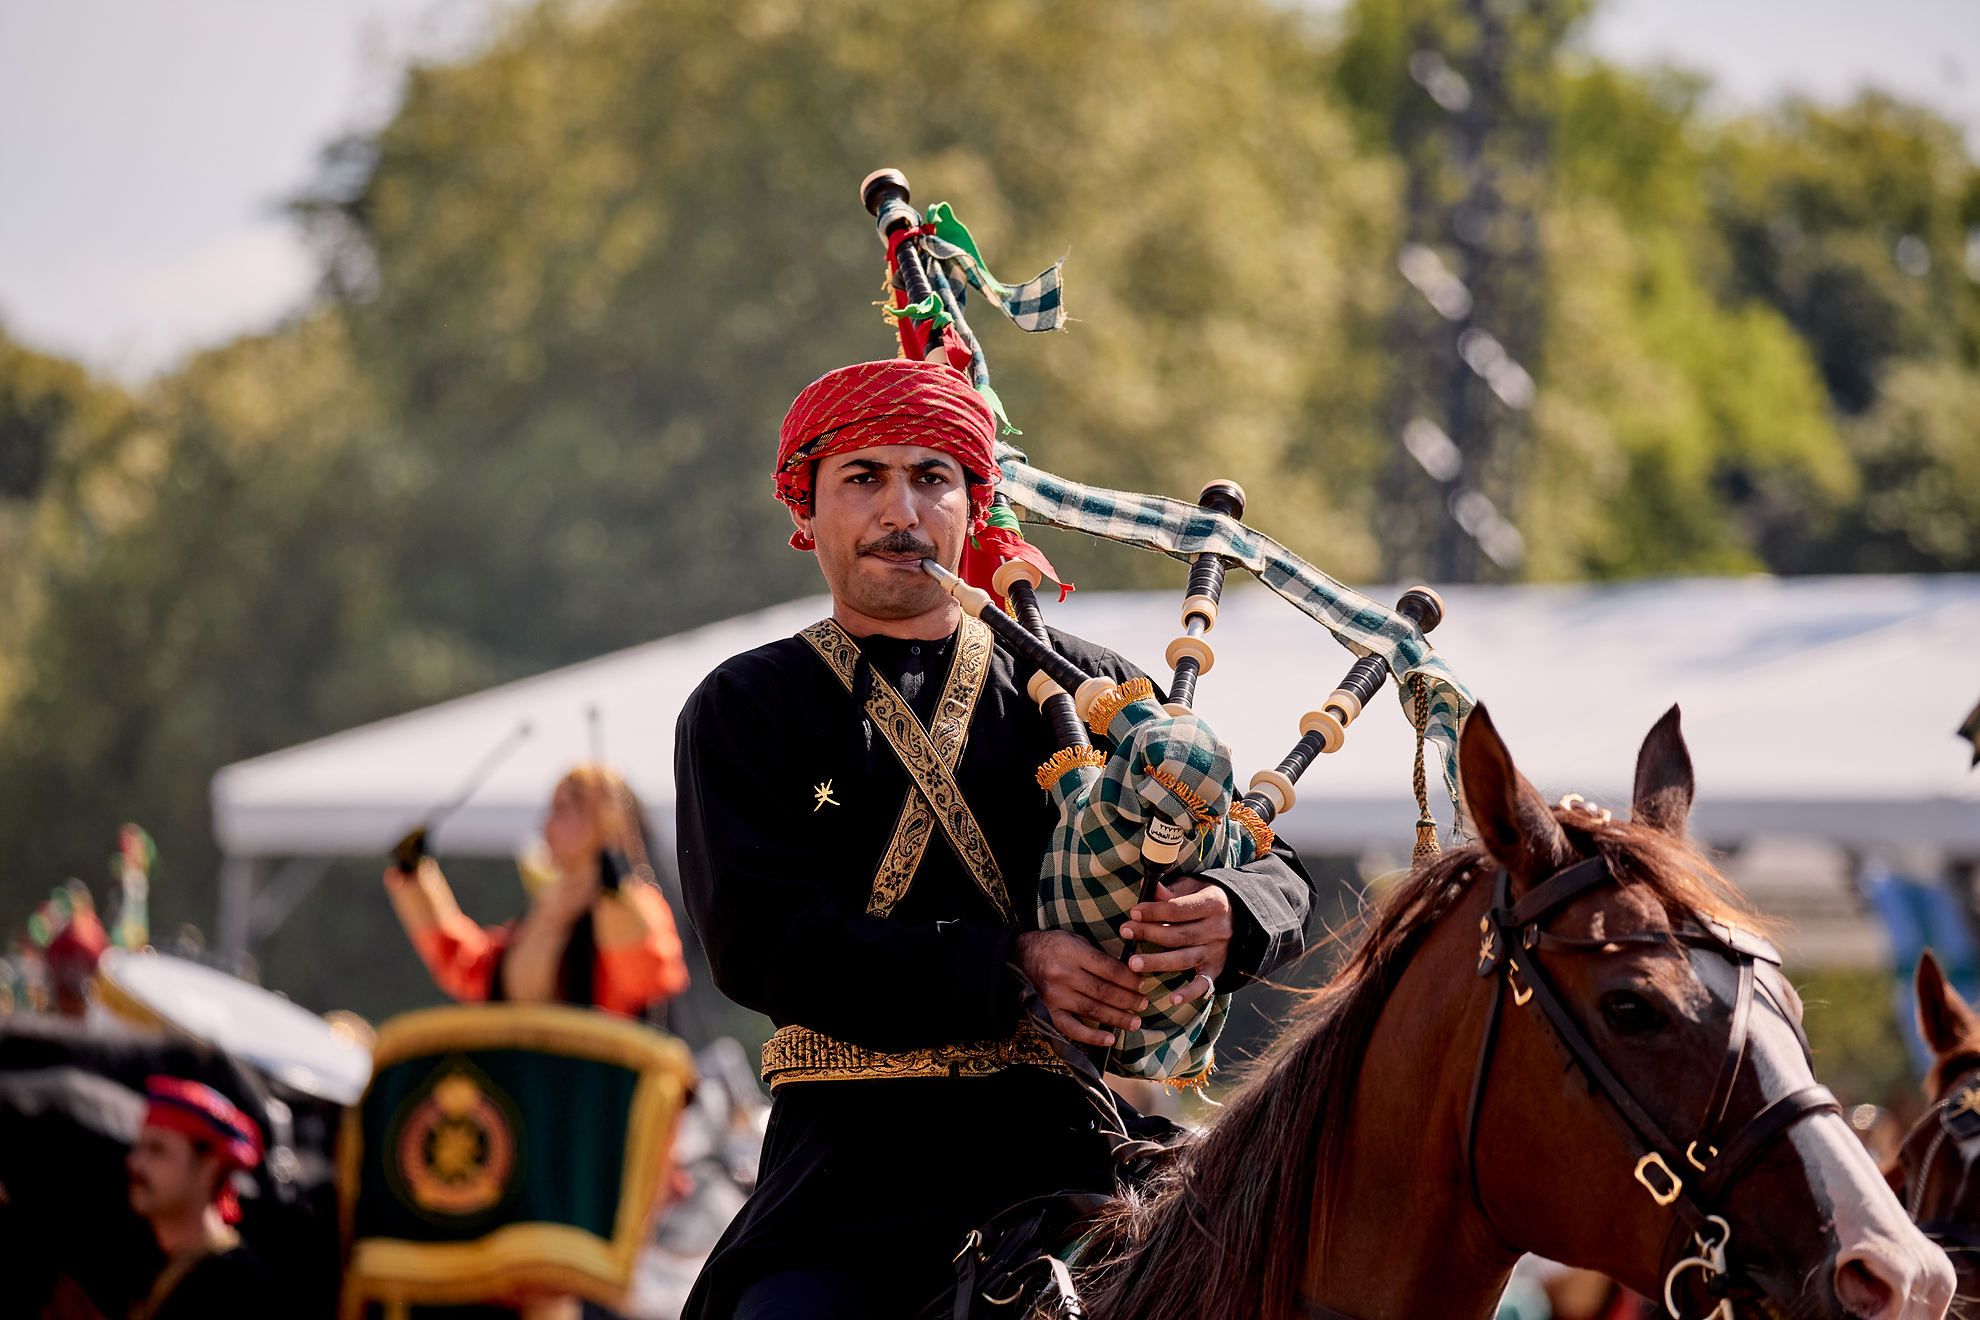 Ein Mann von "the Combined Bands of the Royal Cavalry and the Royal Guard of Oman" Dudelsack spielend auf einem Pferd.